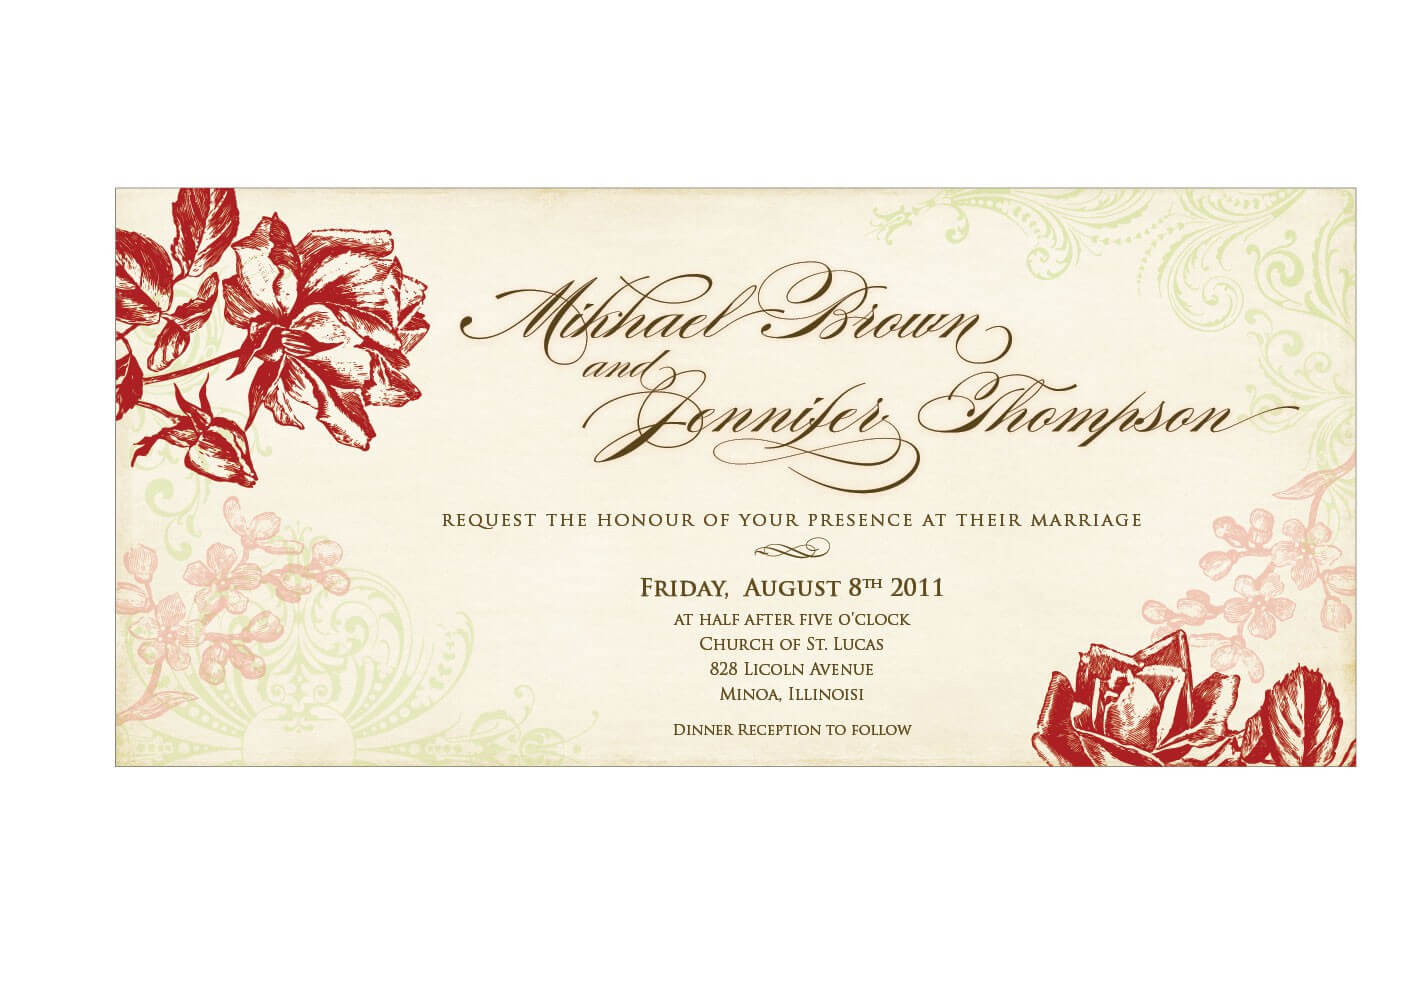 19 Wedding Invitation Cards Templates Designs Images With Sample Wedding Invitation Cards Templates